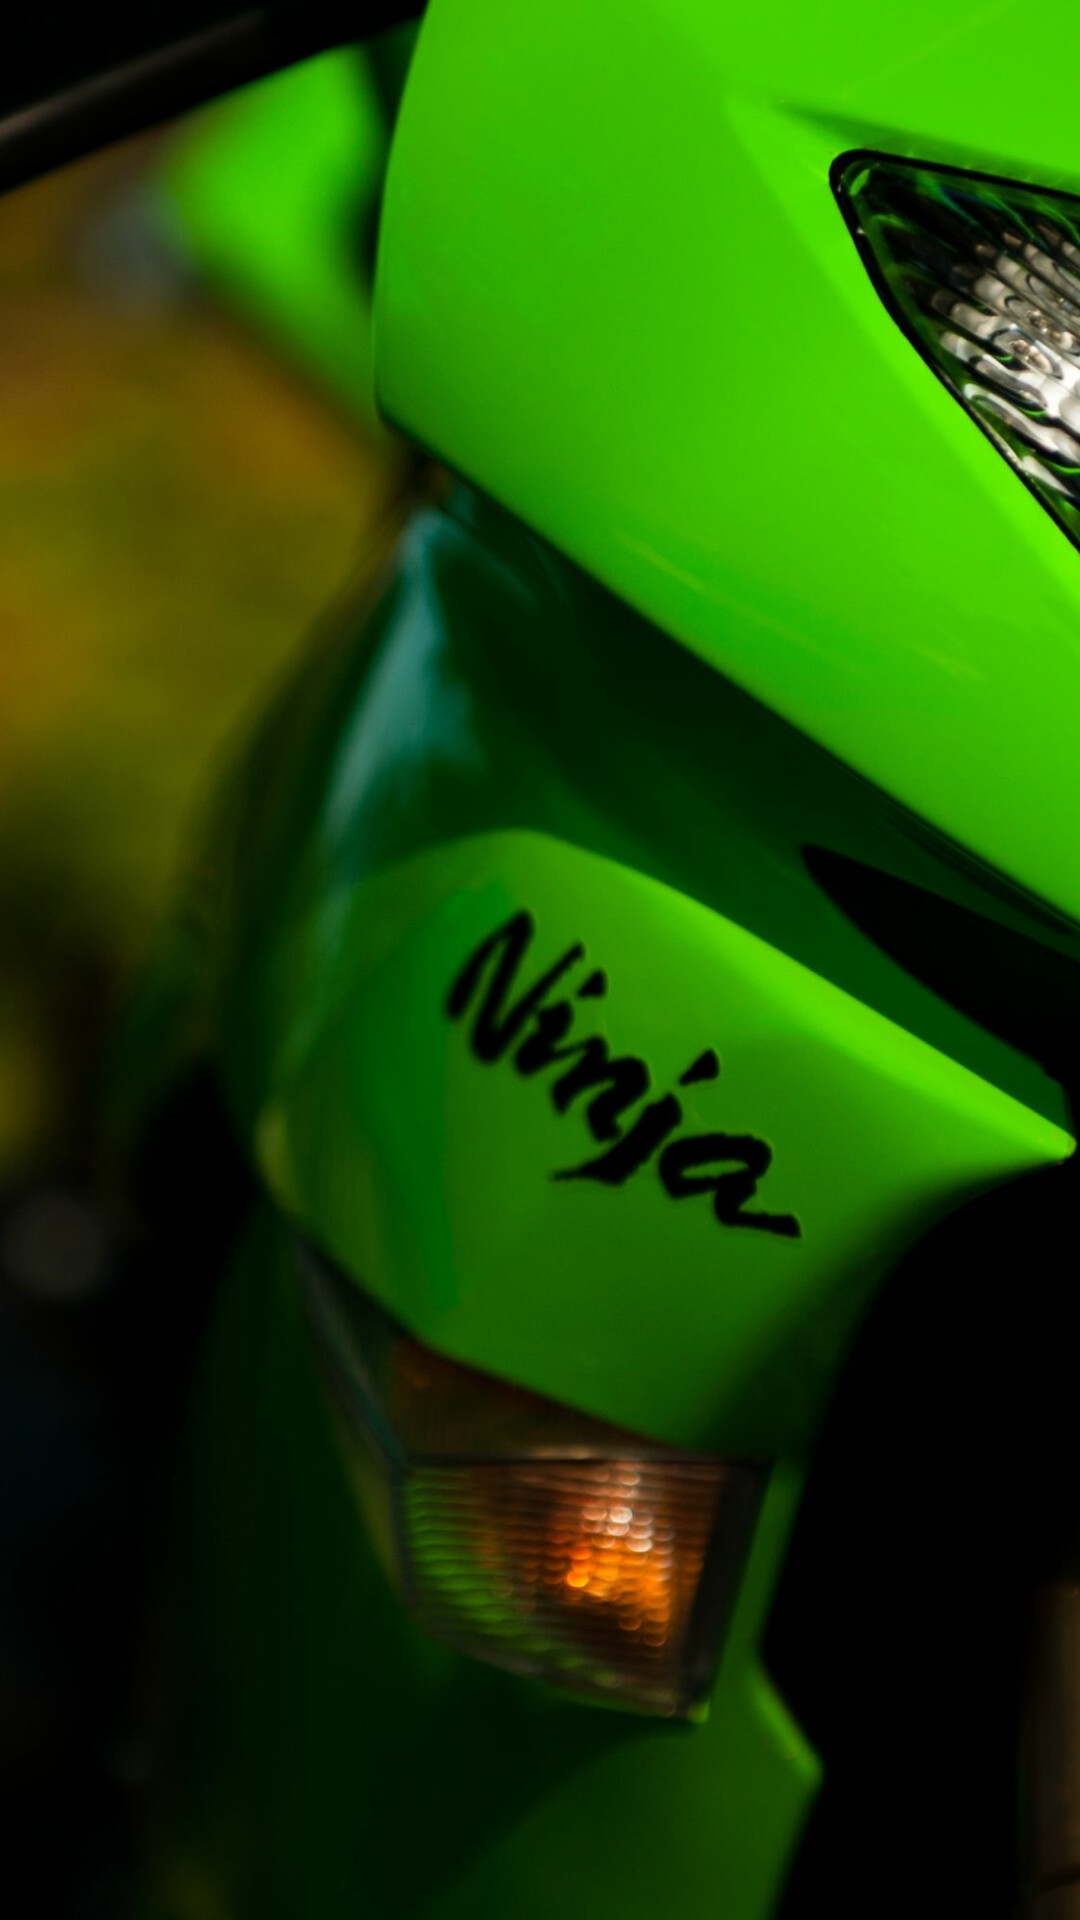 Kawasaki: The Ninja sport bike series from the Japanese motorcycle manufacturer. 1080x1920 Full HD Wallpaper.